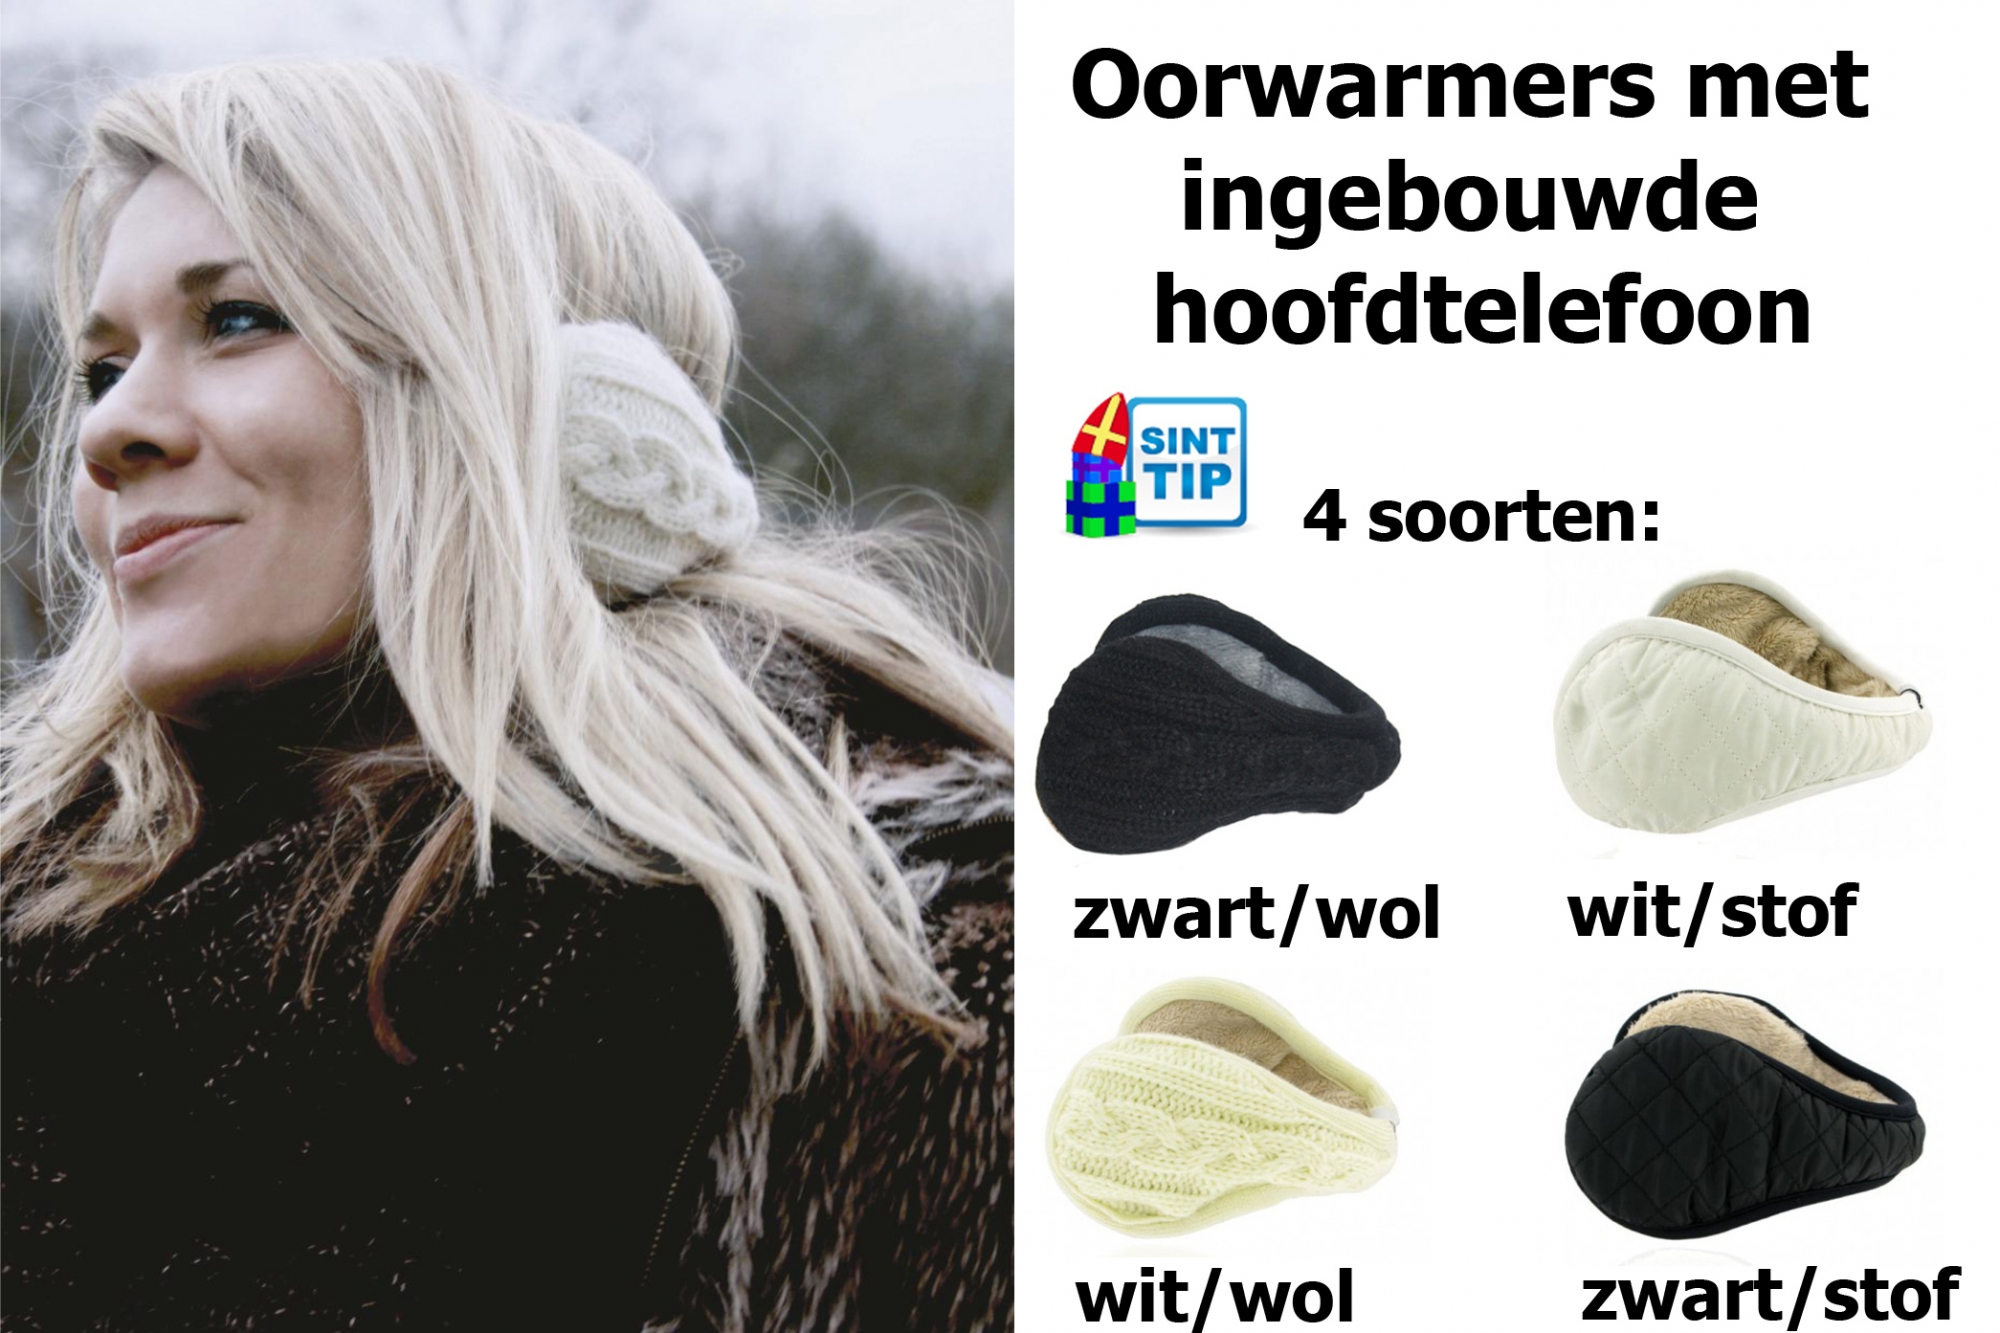 Today's Best Deal - Wit wollen oorwarmers